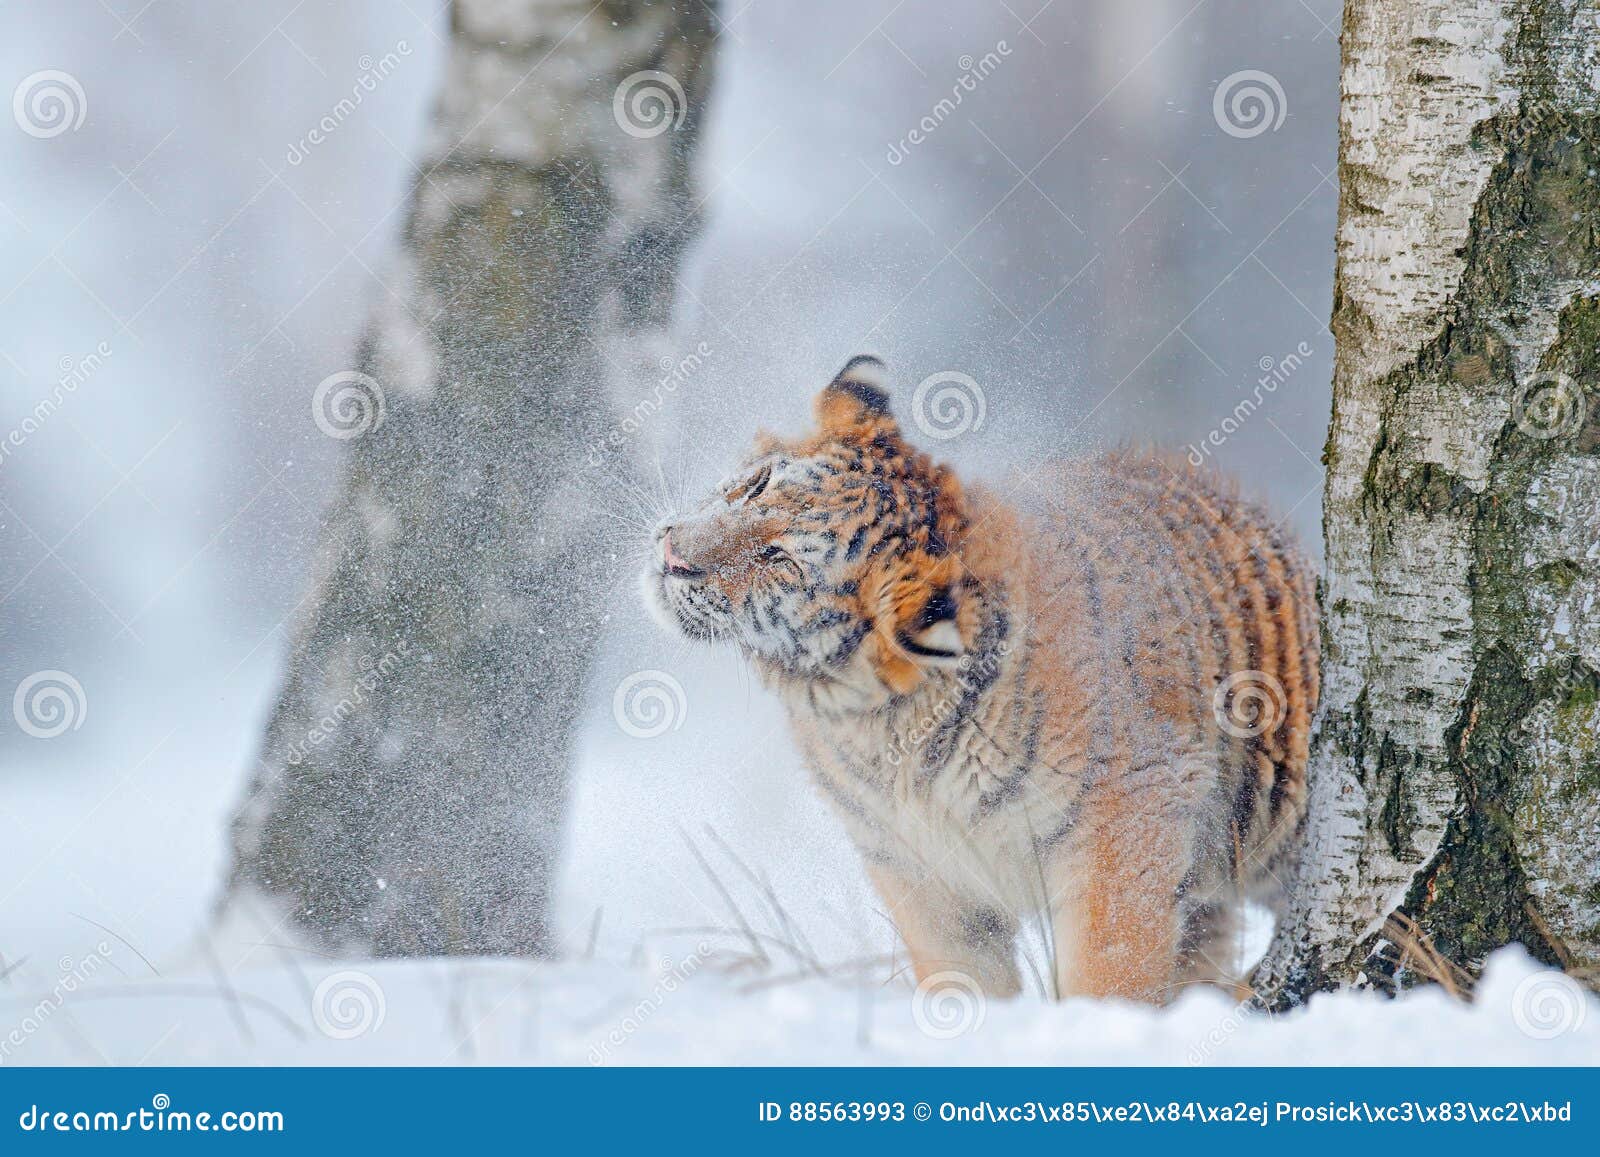 tiger in wild winter nature. amur tiger running in the snow. action wildlife scene, danger animal. cold winter, tajga, russia. sn